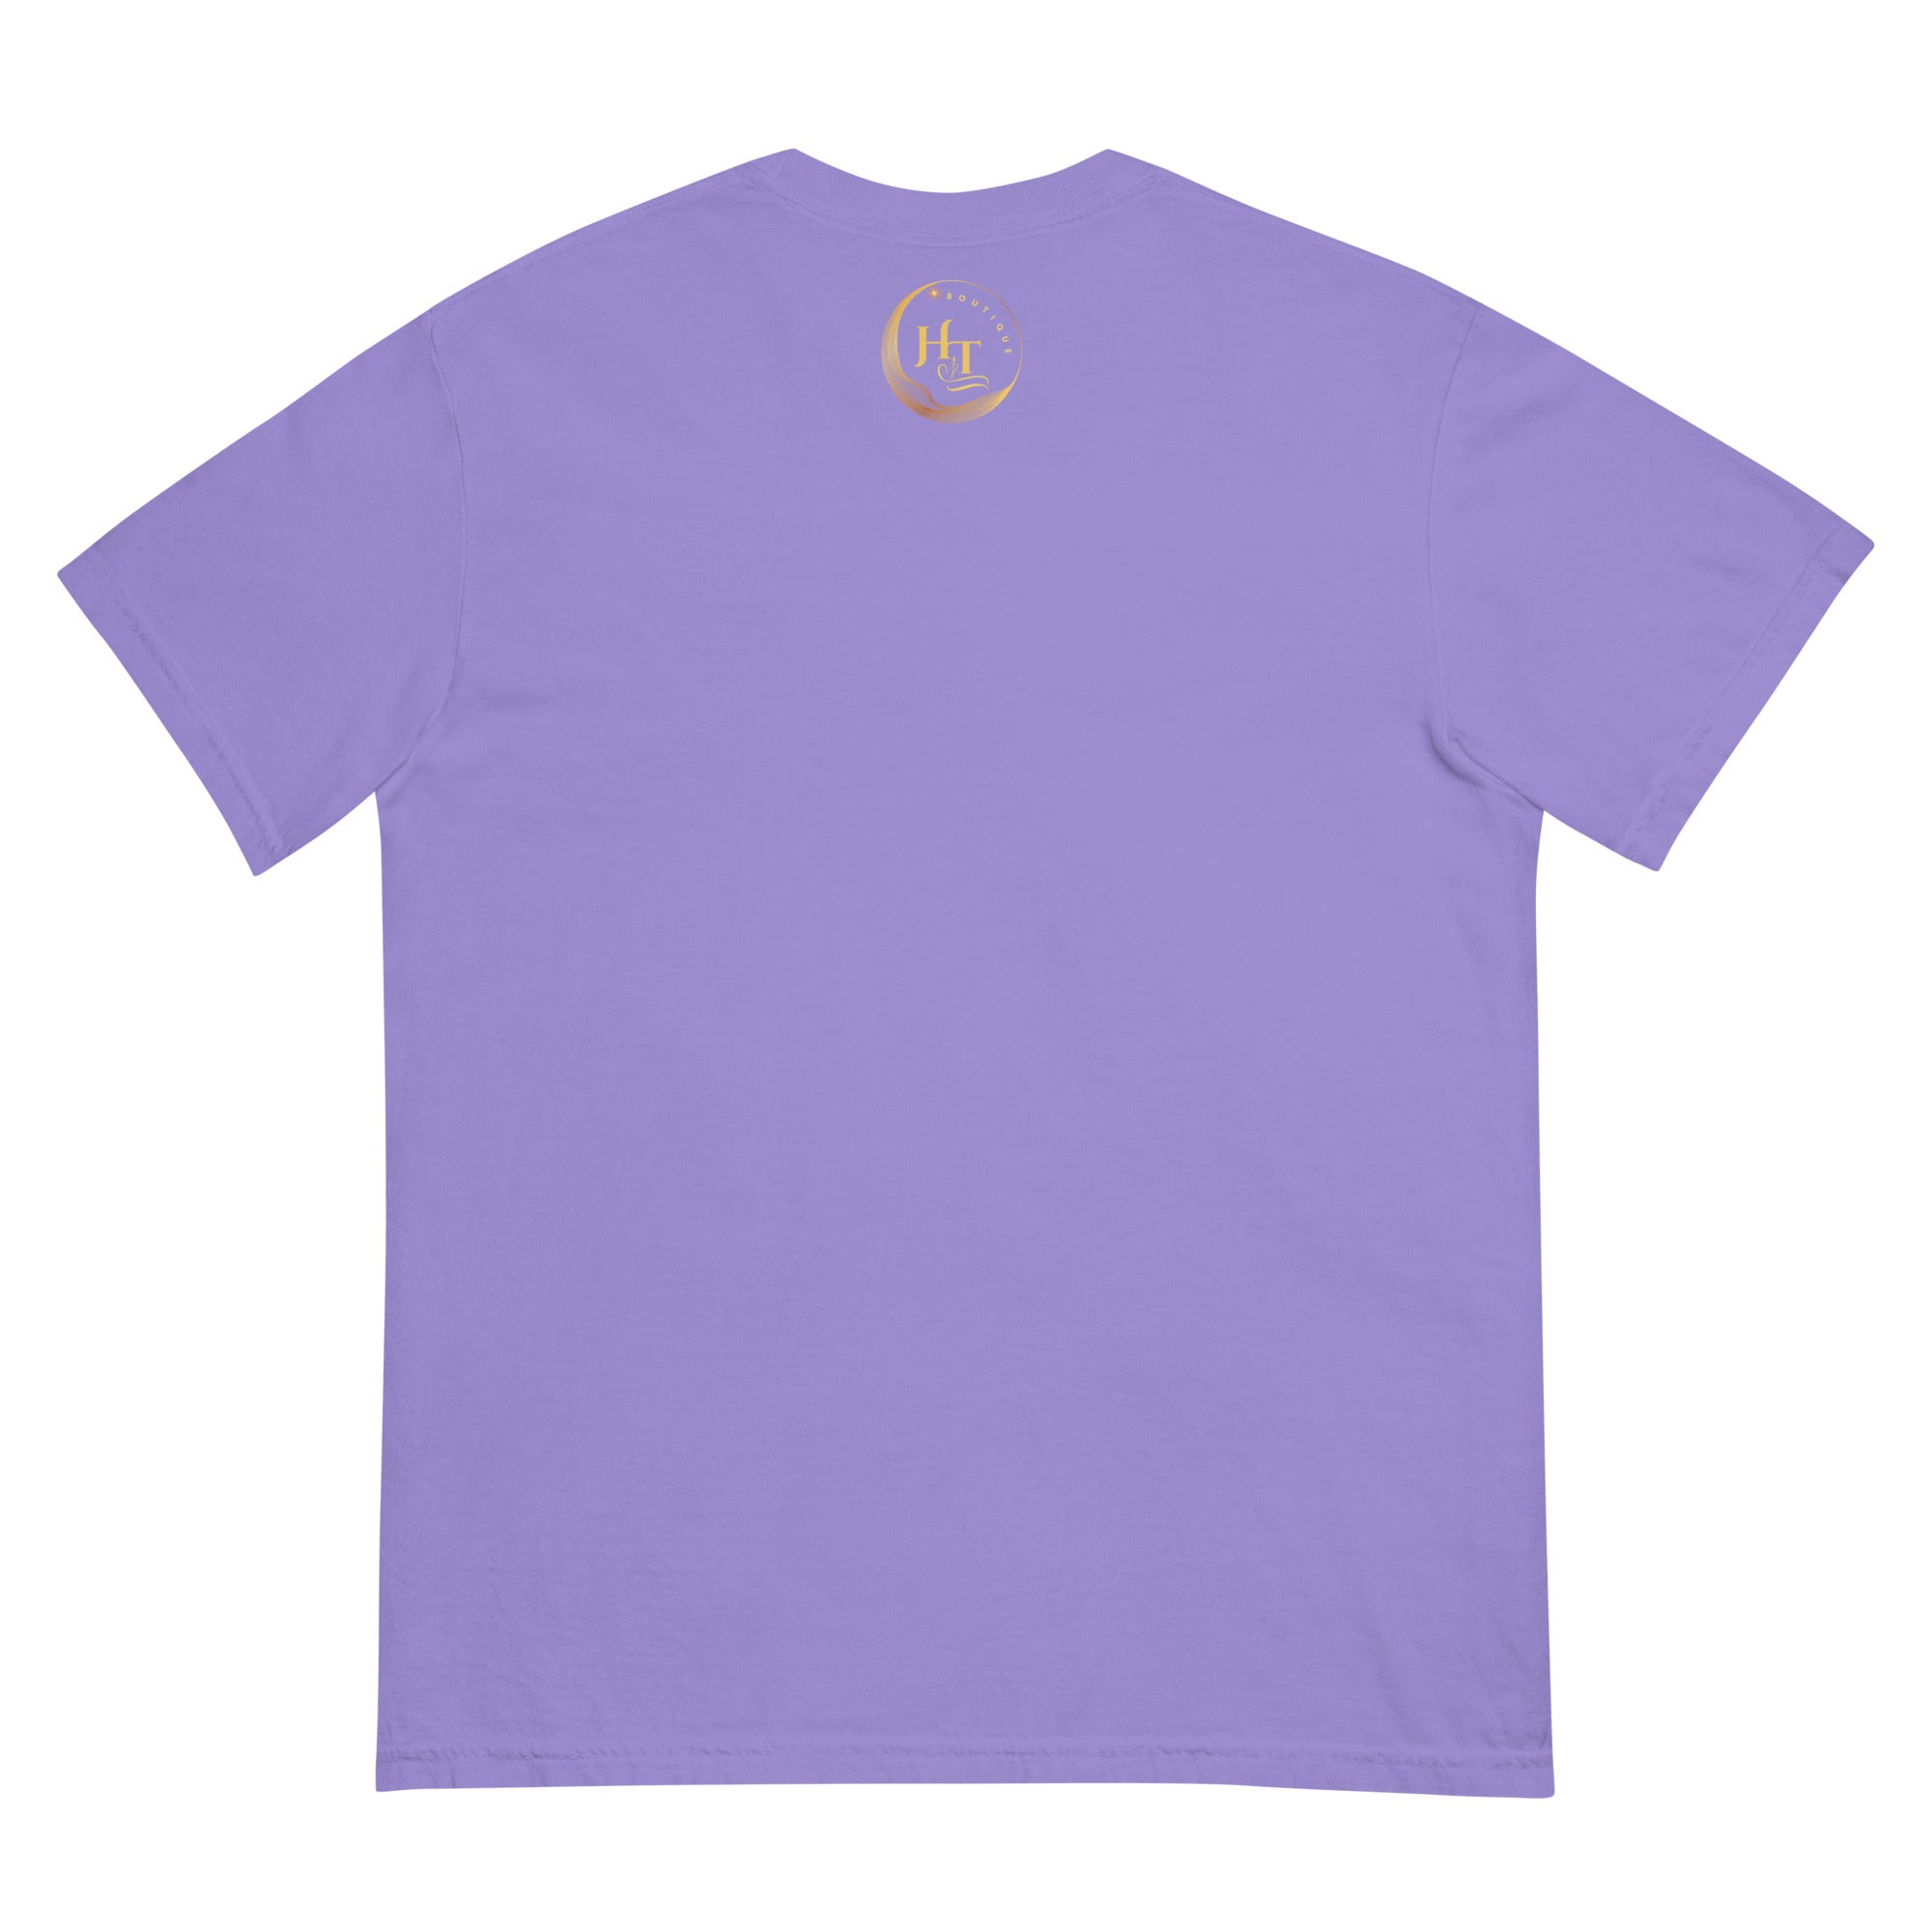 Leo Unisex garment-dyed heavyweight t-shirt